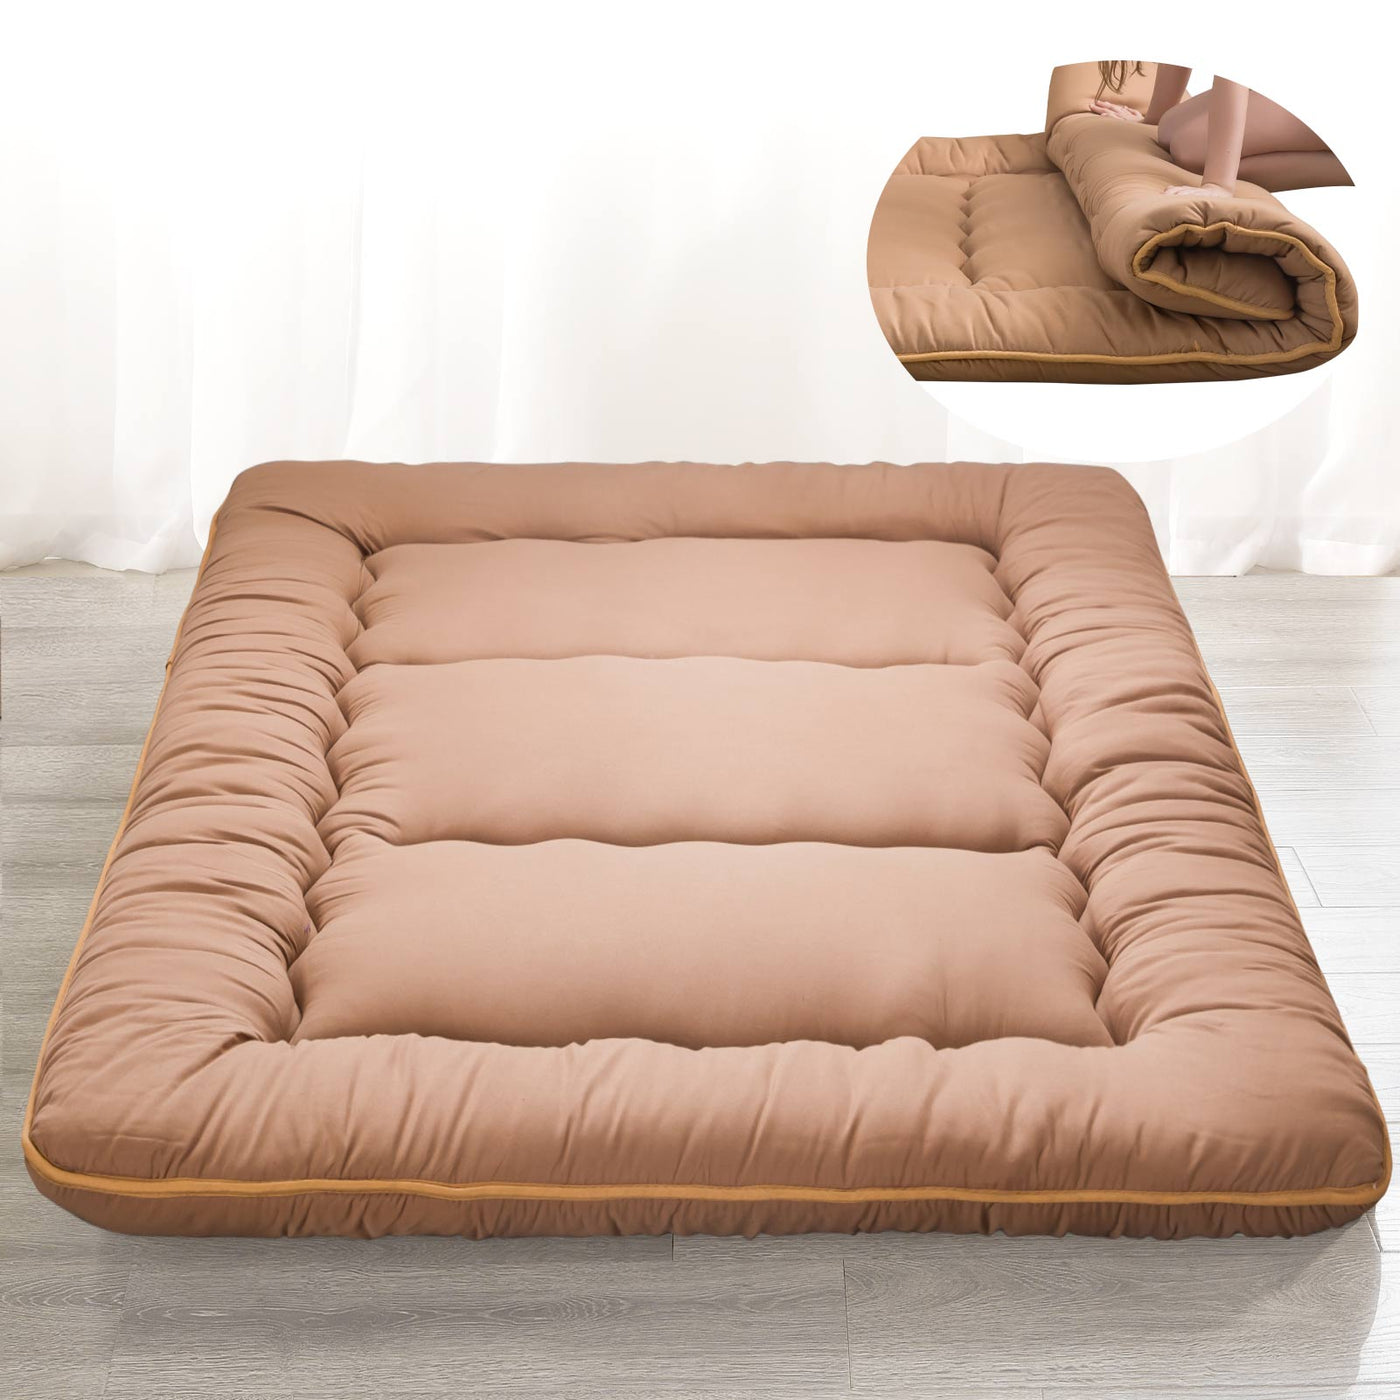 MAXYOYO Japanese Floor Futon Mattress, Portable futon mattress